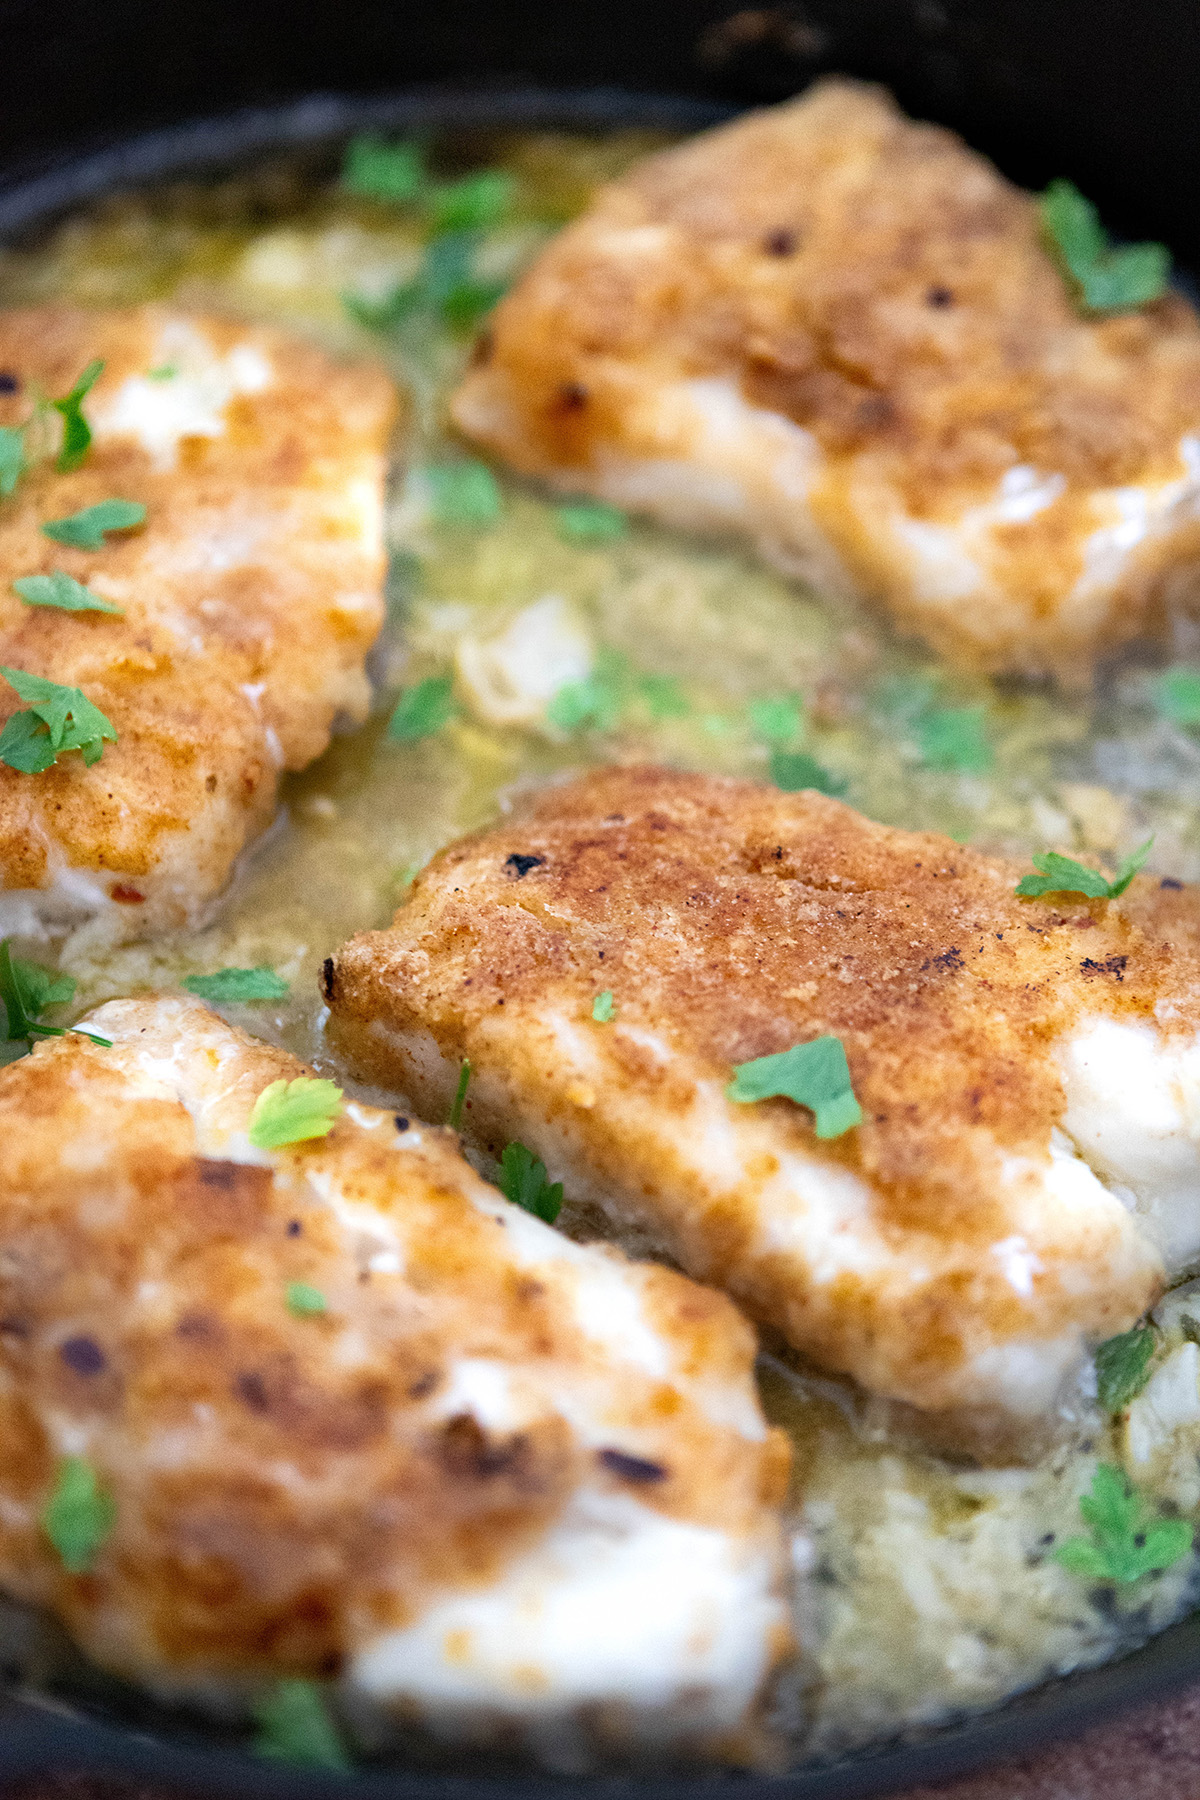 Gluten Free Fried Fish: A Pan-Fried & Gluten-Free Recipe